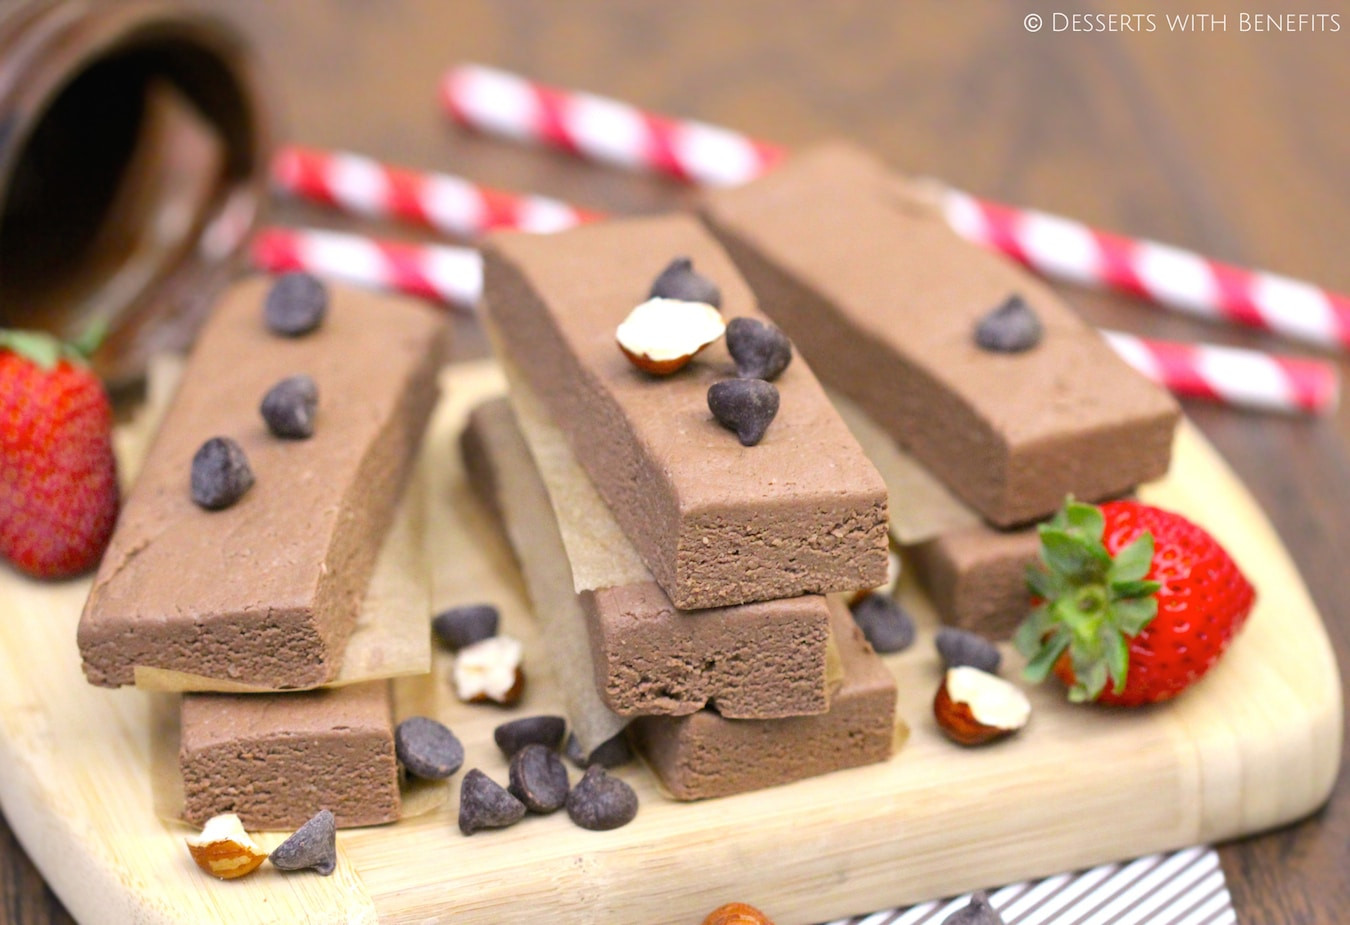 Low Fat Sugar Free Desserts
 Healthy Nutella Fudge Protein Bars Desserts with Benefits